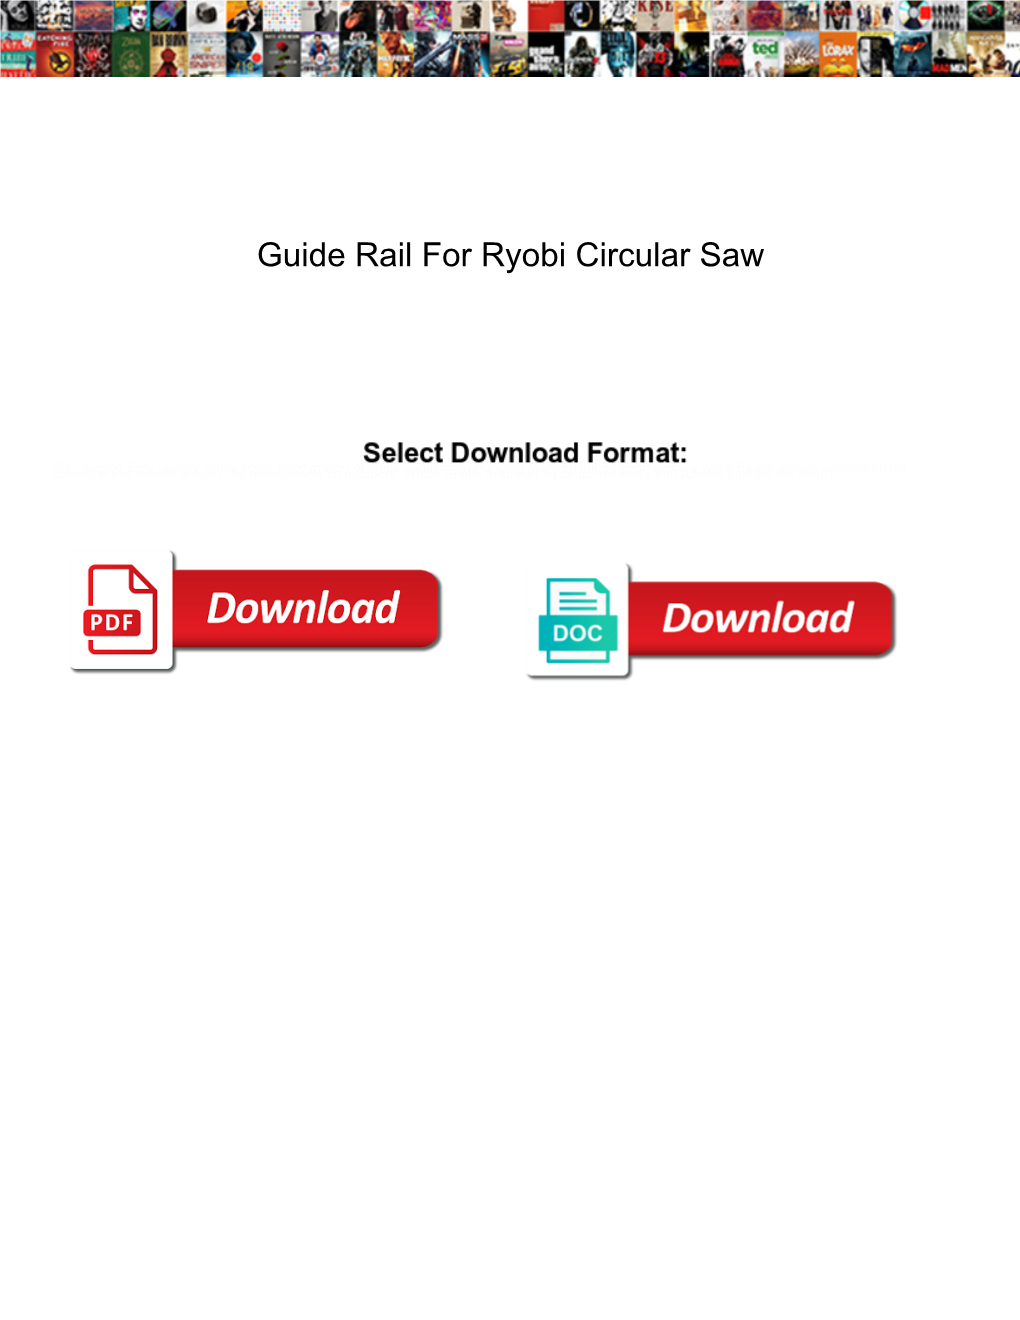 Guide Rail for Ryobi Circular Saw